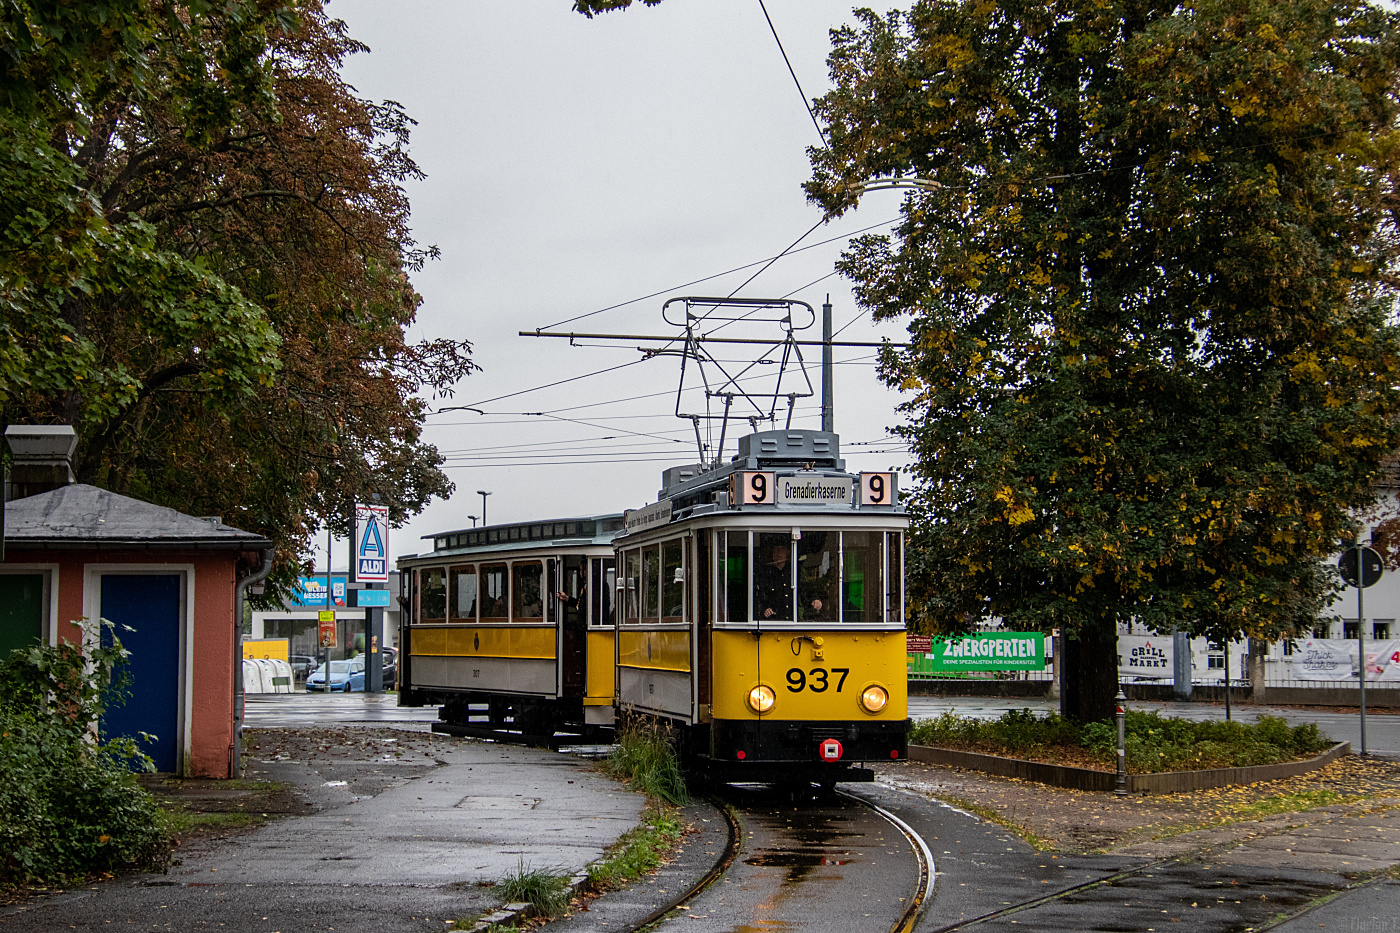 Miscellaneous 2-axle tram #937